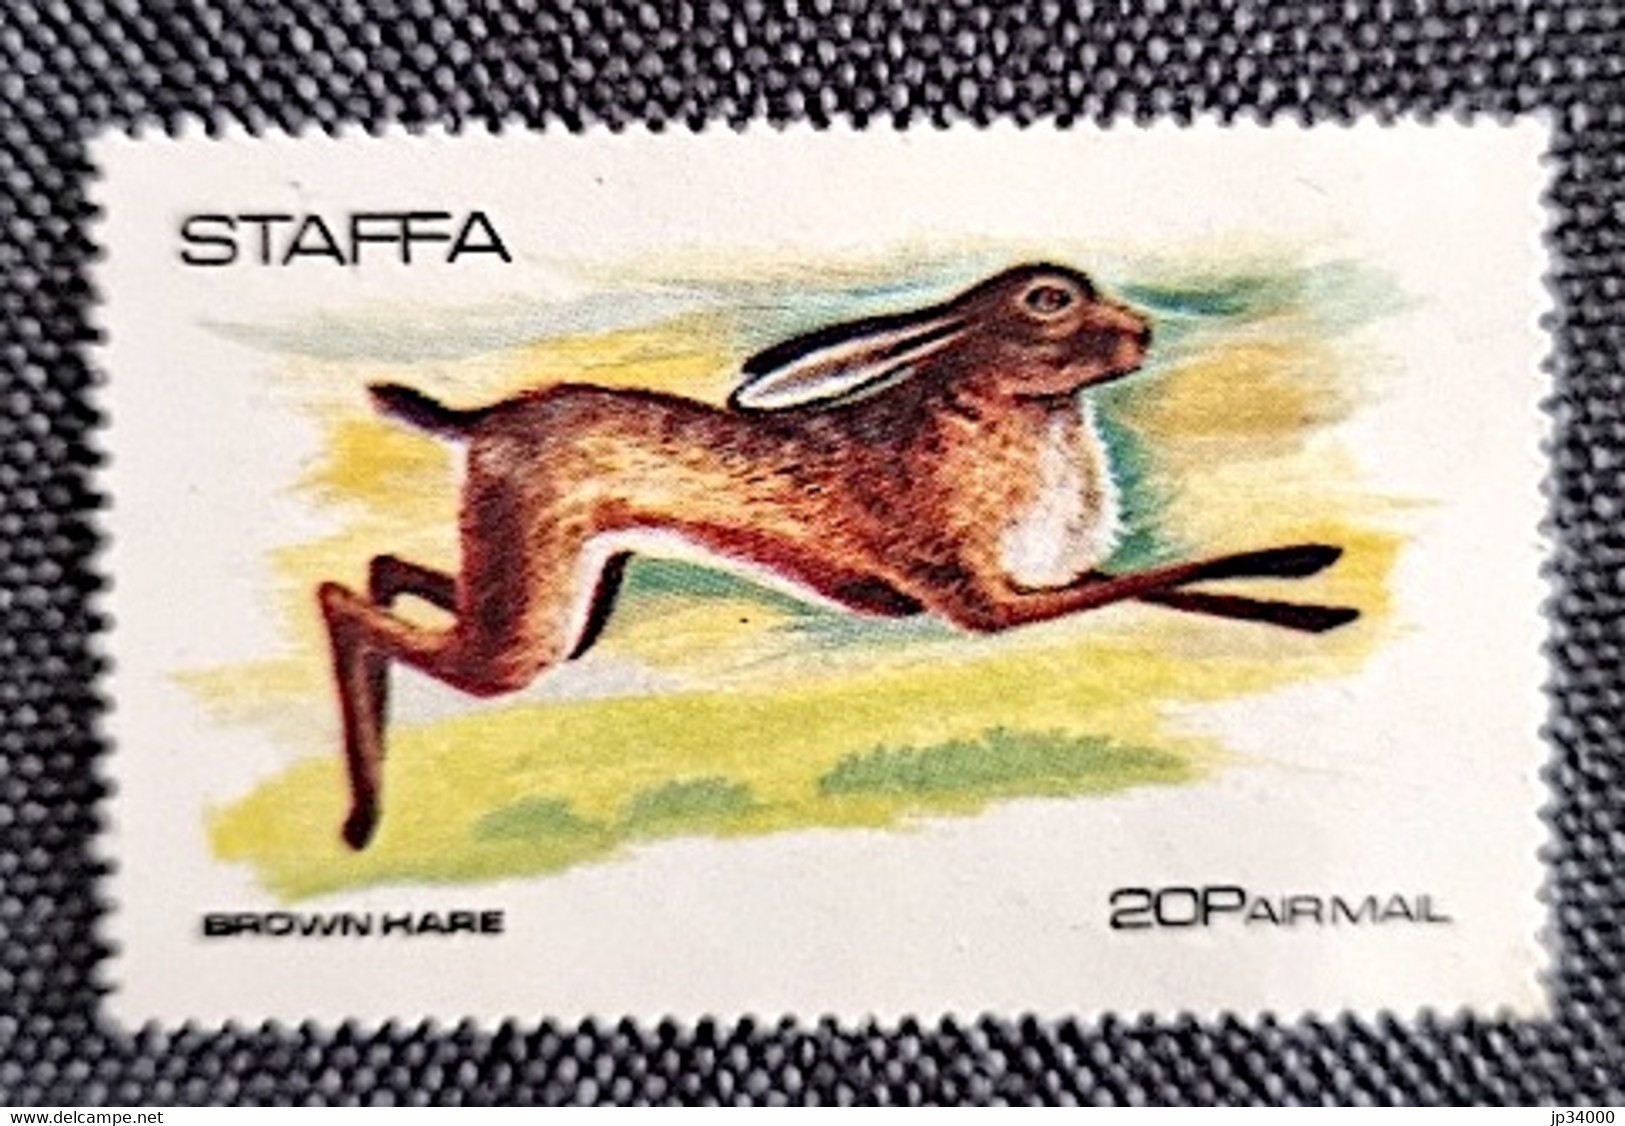 STAFFA Lapins, Lapin, Rabbit, Conejo. (1 Valeur Dentelée.) ** Neuf Sans Charnière - Rabbits